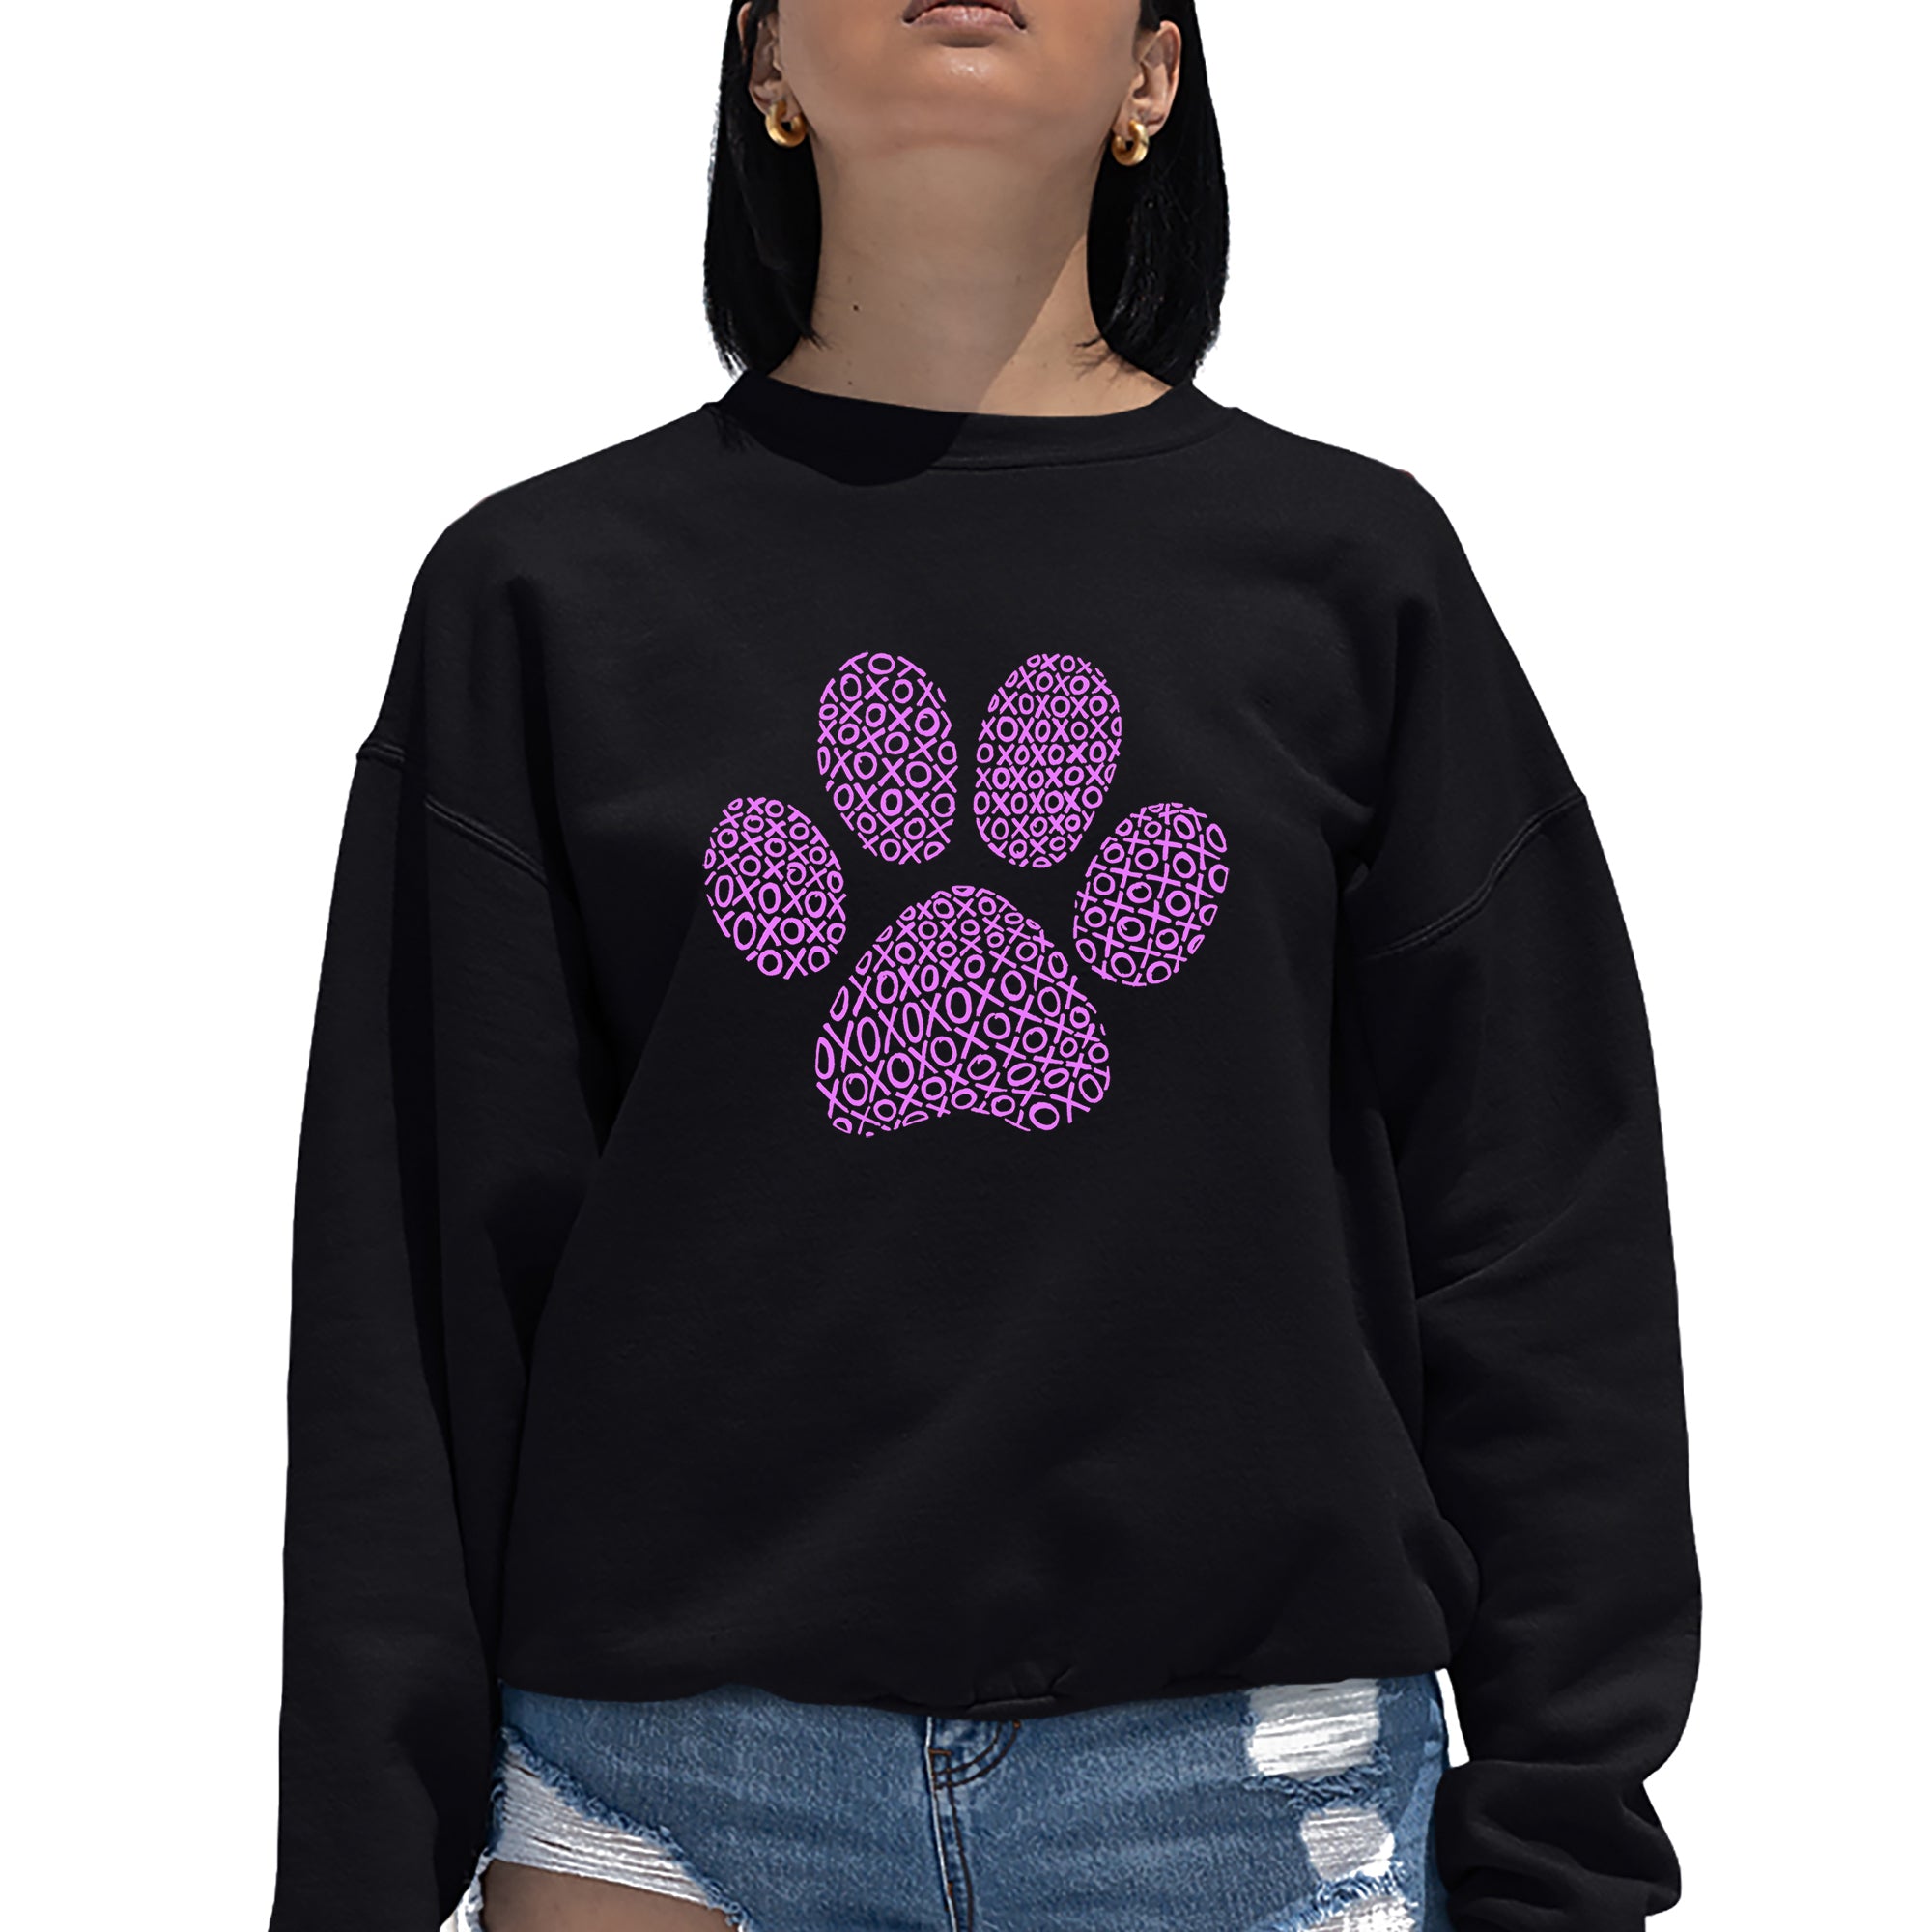 XOXO Dog Paw - Women's Word Art Crewneck Sweatshirt - Black - XX-Large